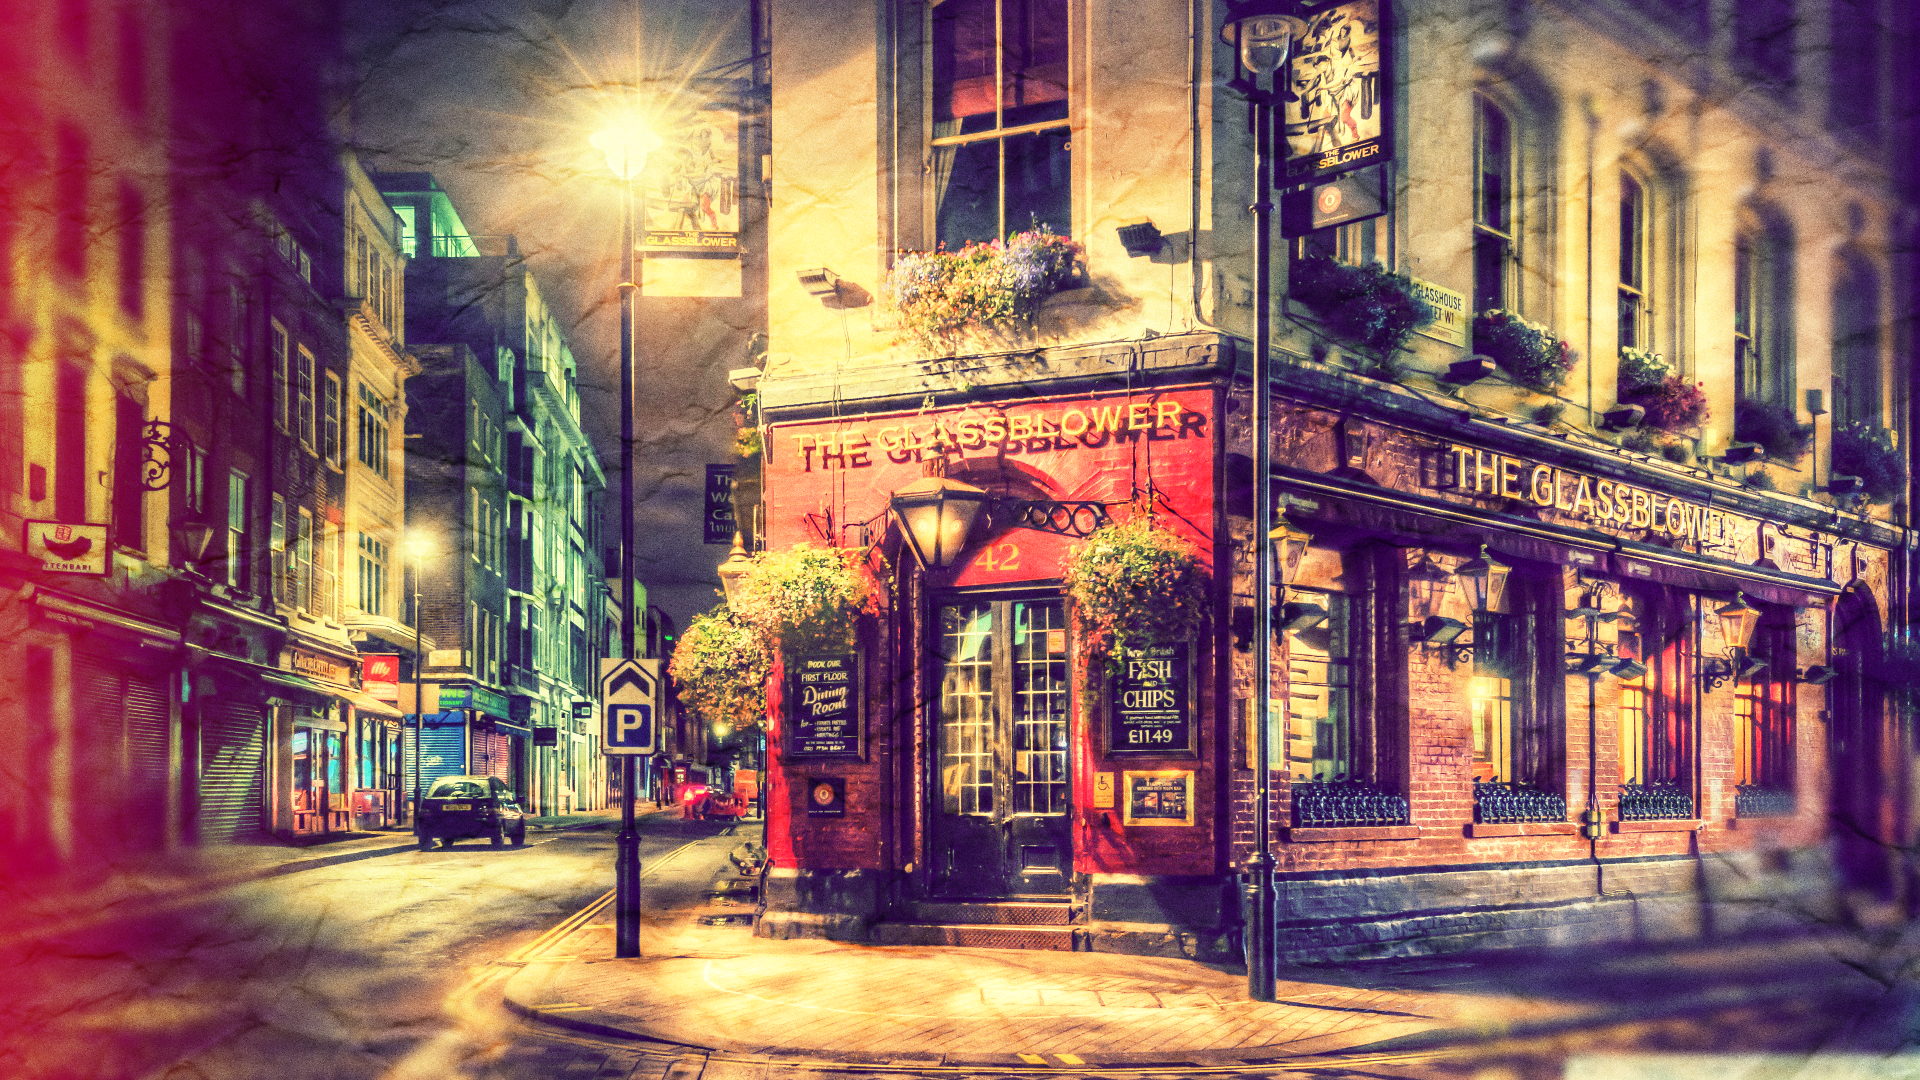 Brewer Pub London Vintage by ZeroMask on DeviantArt